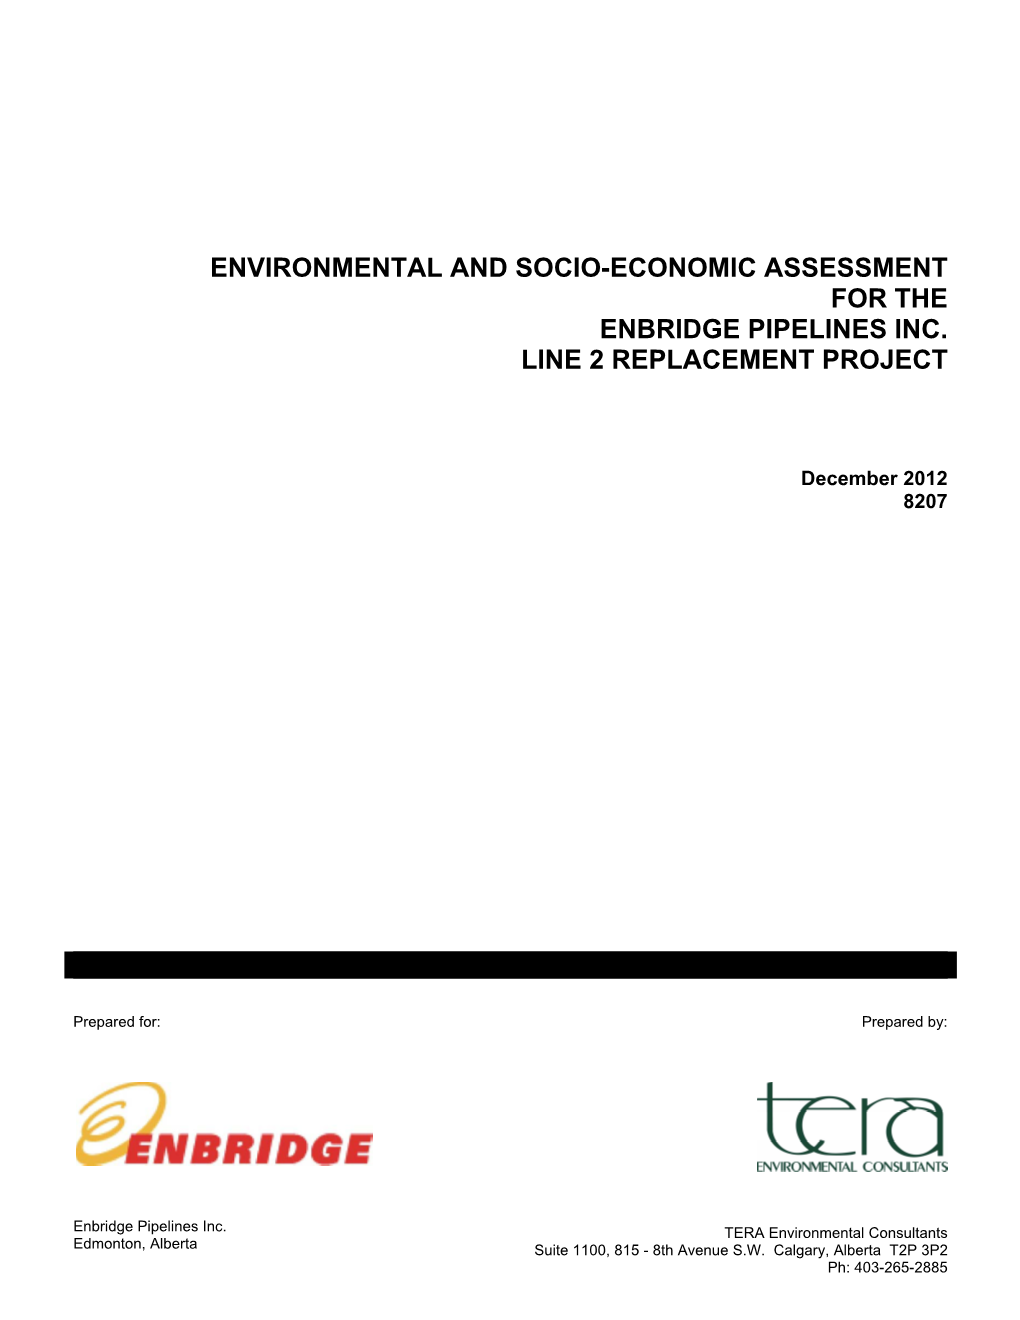 Environmental and Socio-Economic Assessment for the Enbridge Pipelines Inc